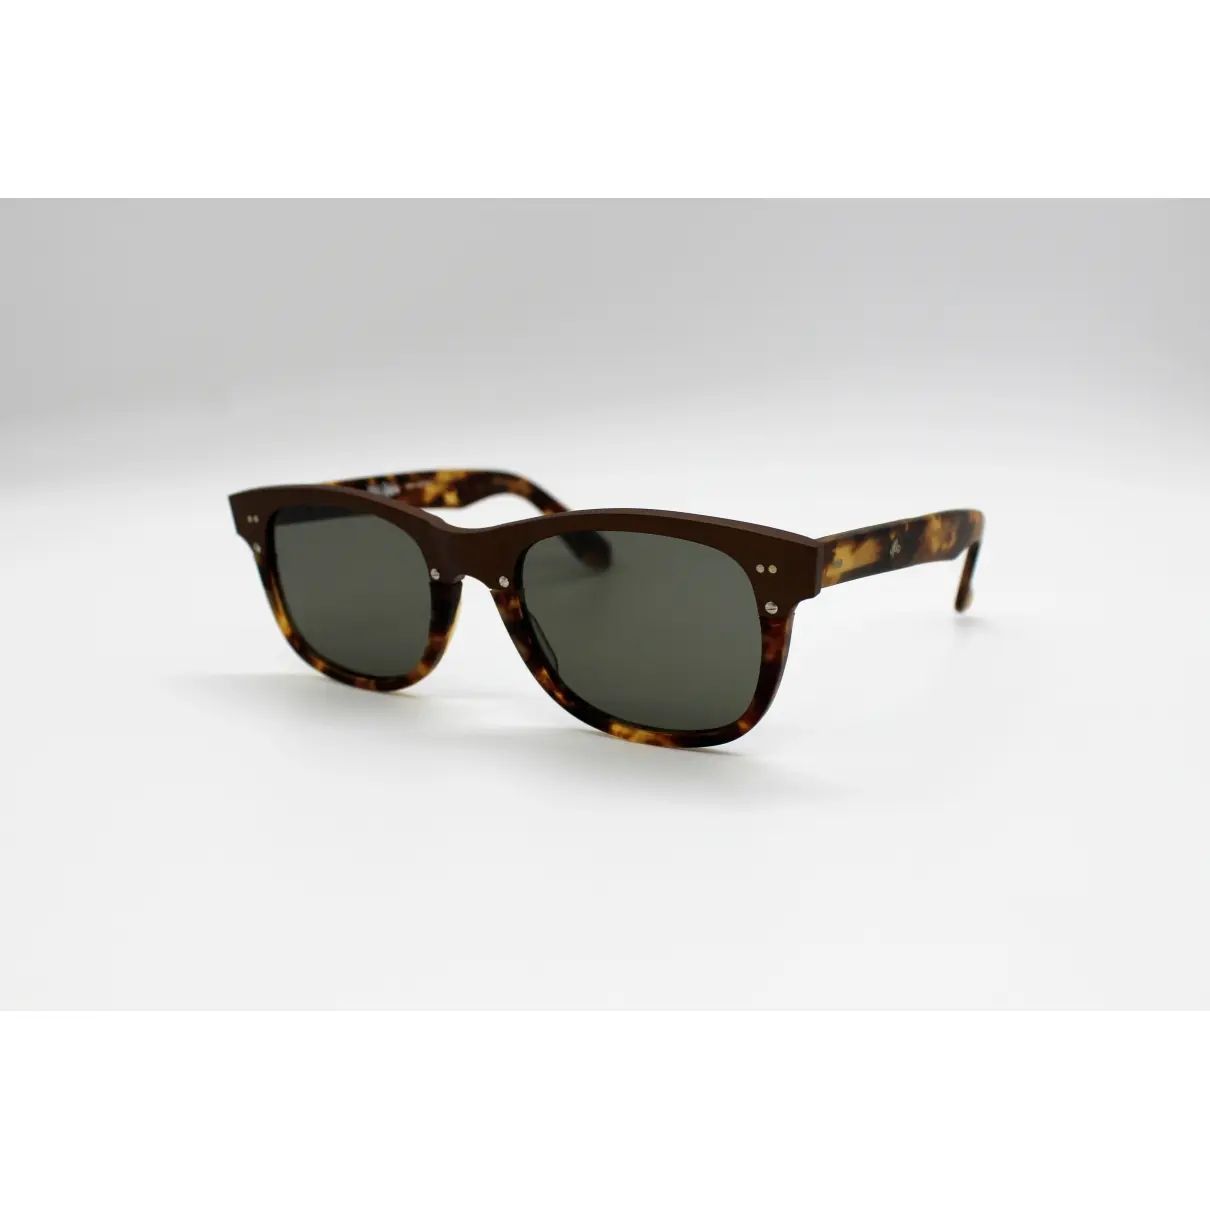 Sunglasses Jean Paul Gaultier - Vintage